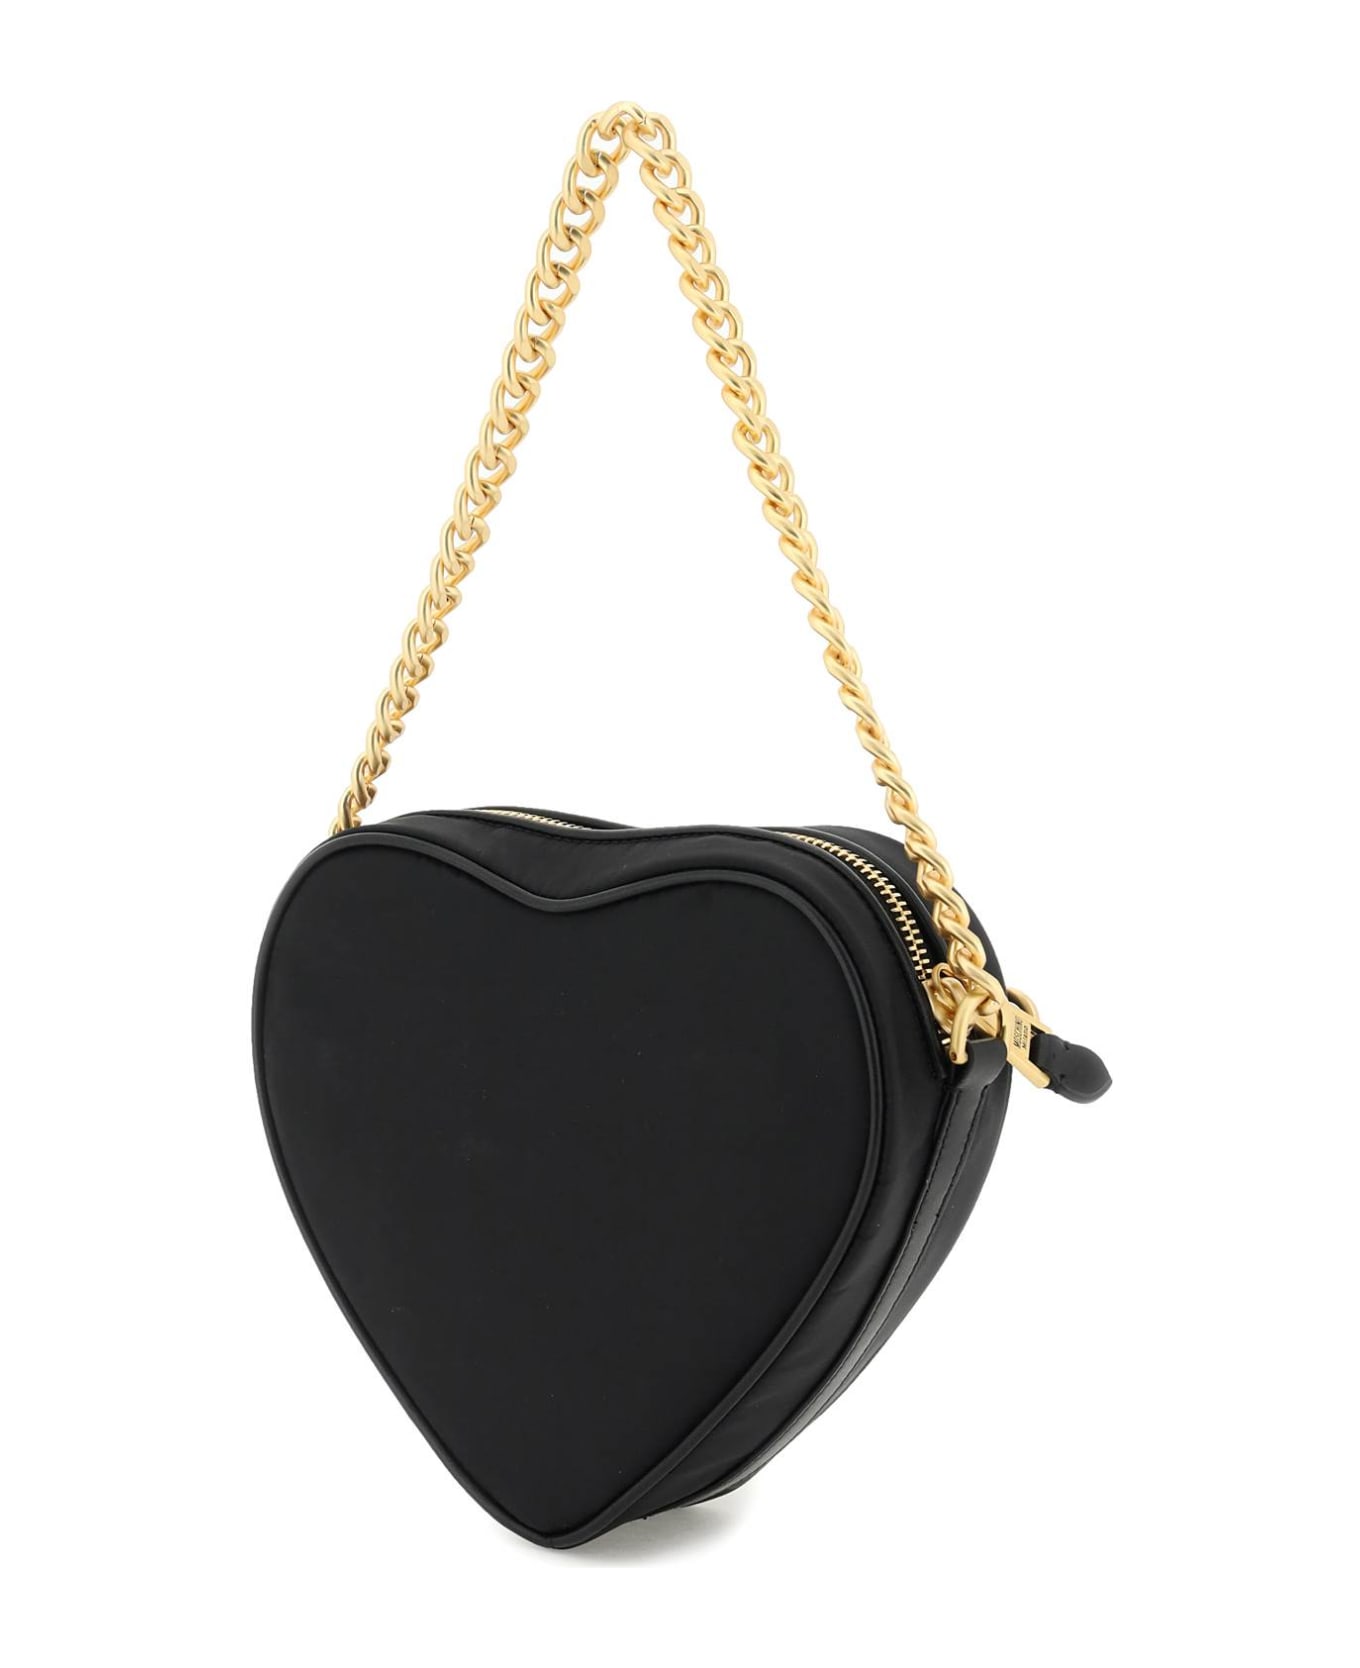 Moschino Heart Nylon Shoulder Bag - FANTASIA NERO (Black)